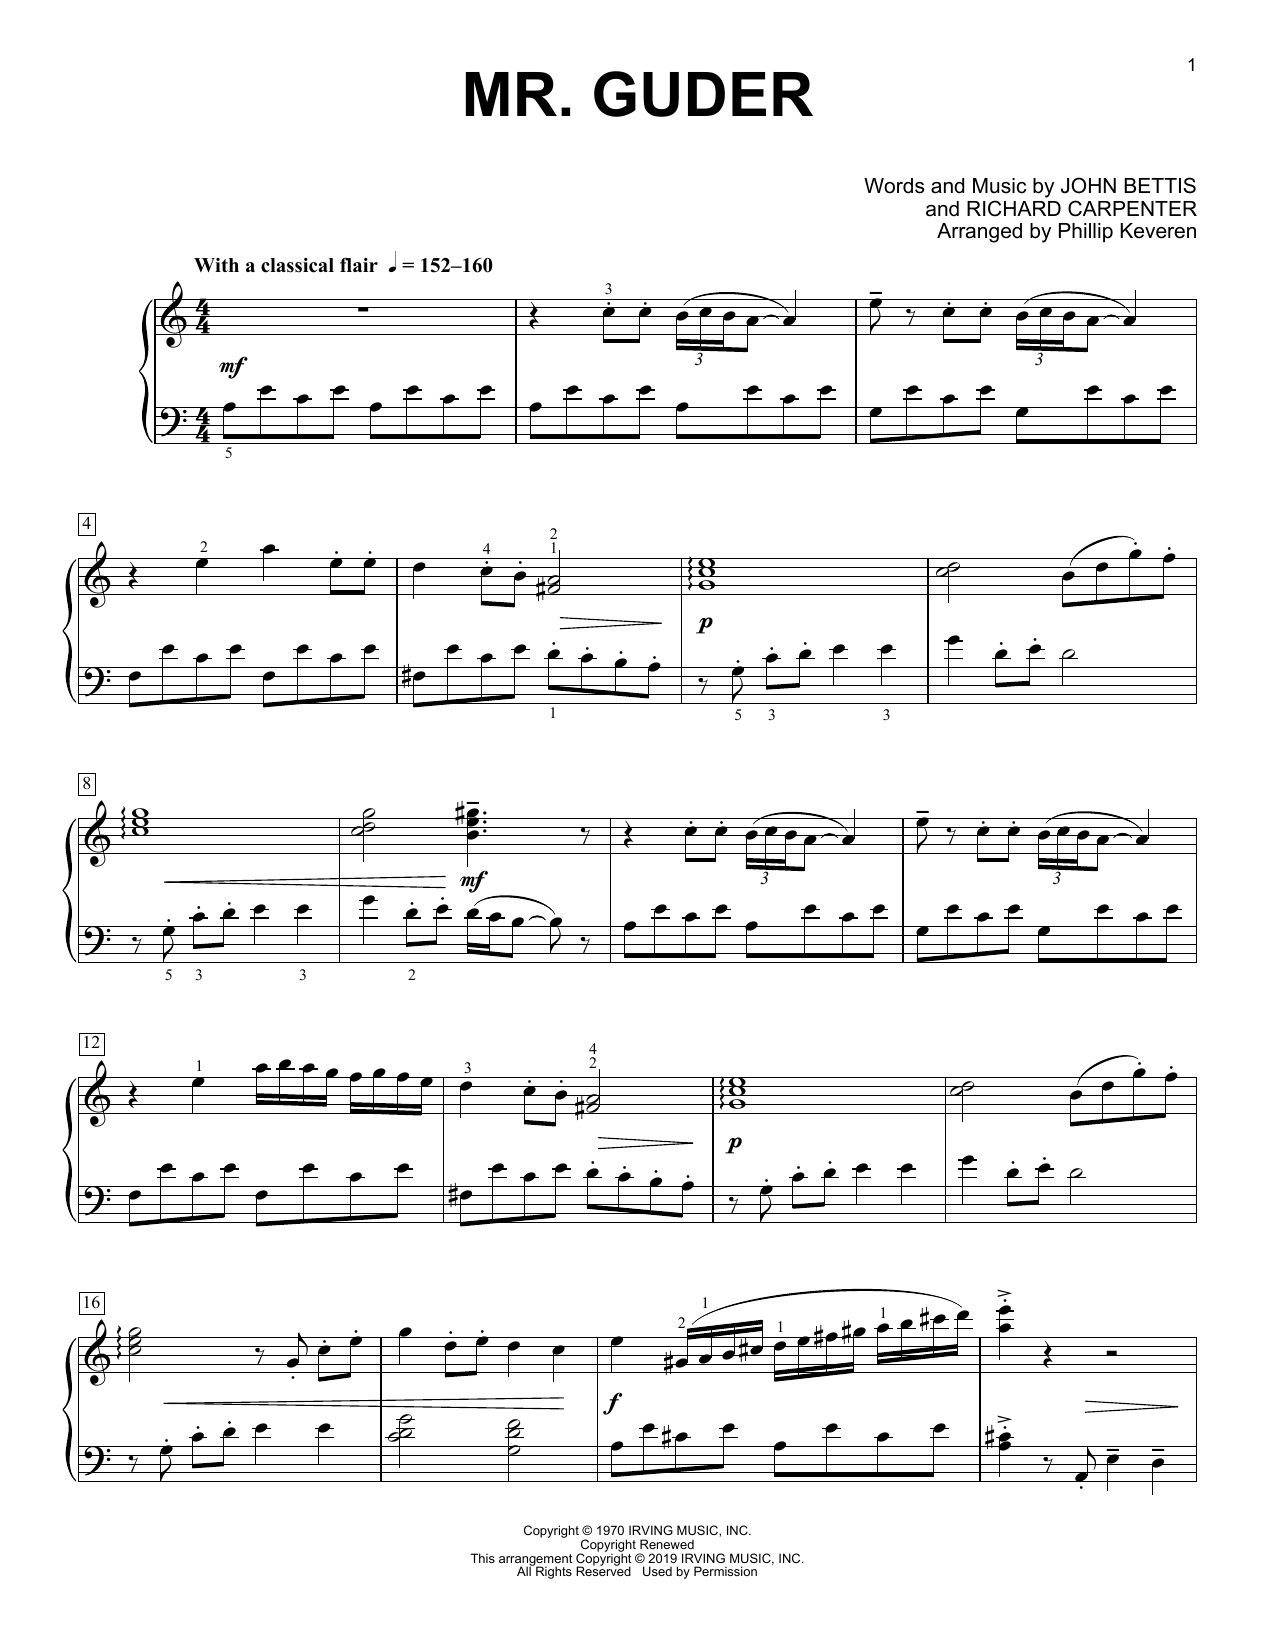 Carpenters Mr. Guder (arr. Phillip Keveren) Sheet Music Notes & Chords for Piano Solo - Download or Print PDF